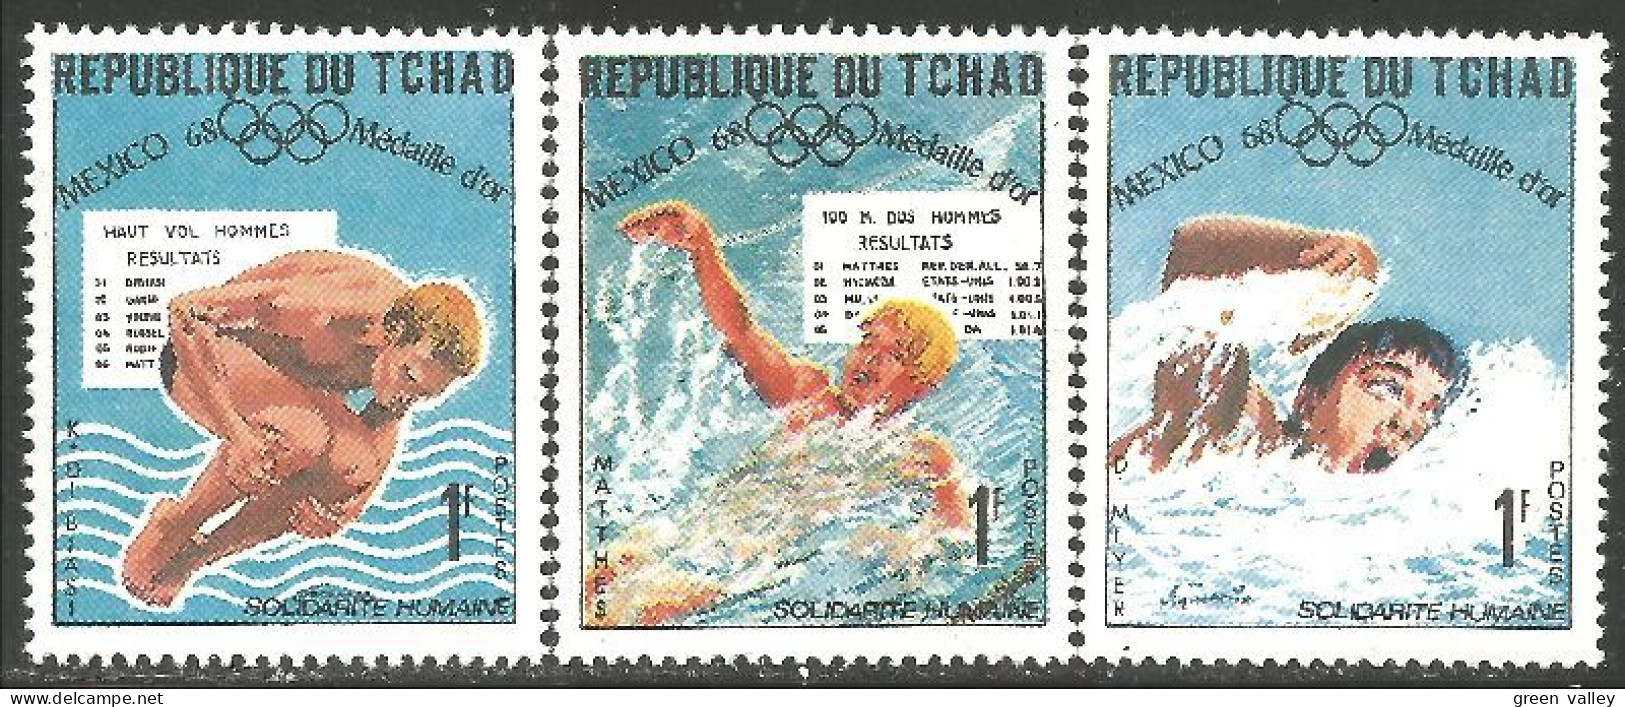 855 Tchad Natation Swimming Mexico Olympiques 1968 MNH ** Neuf SC (TCD-36b) - Summer 1968: Mexico City